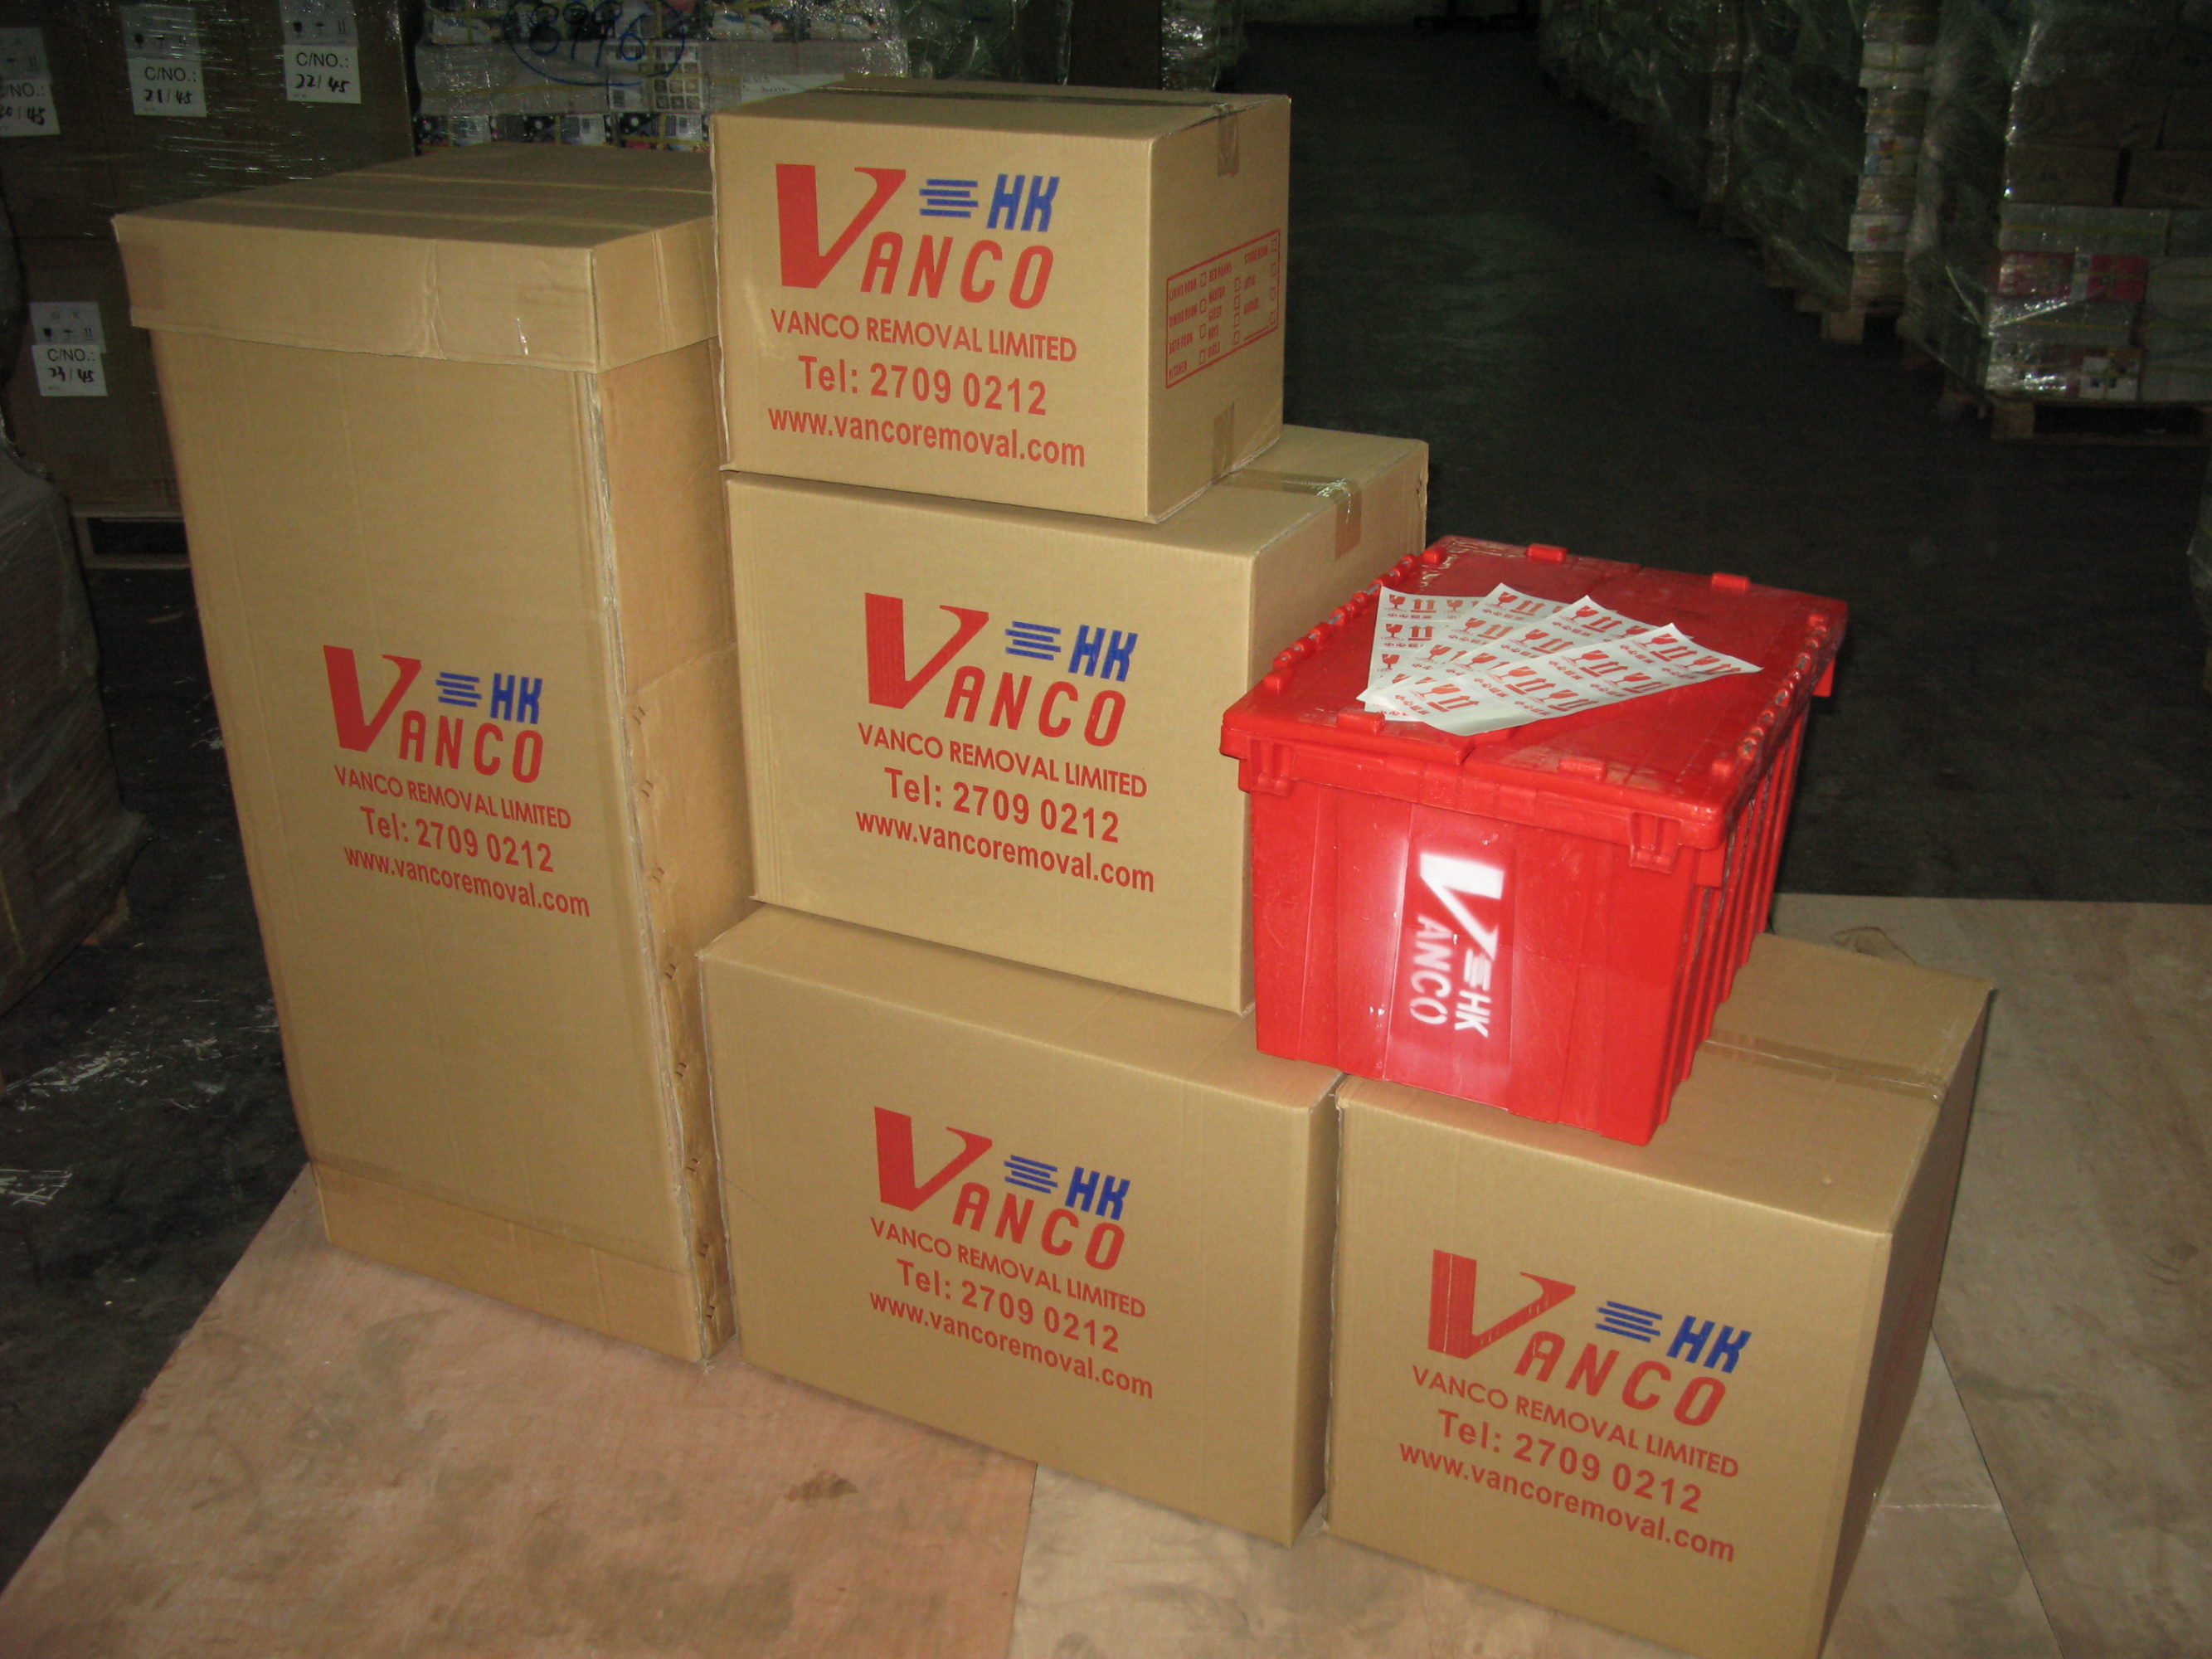 Vanco International Mini storage facility Hong Kong